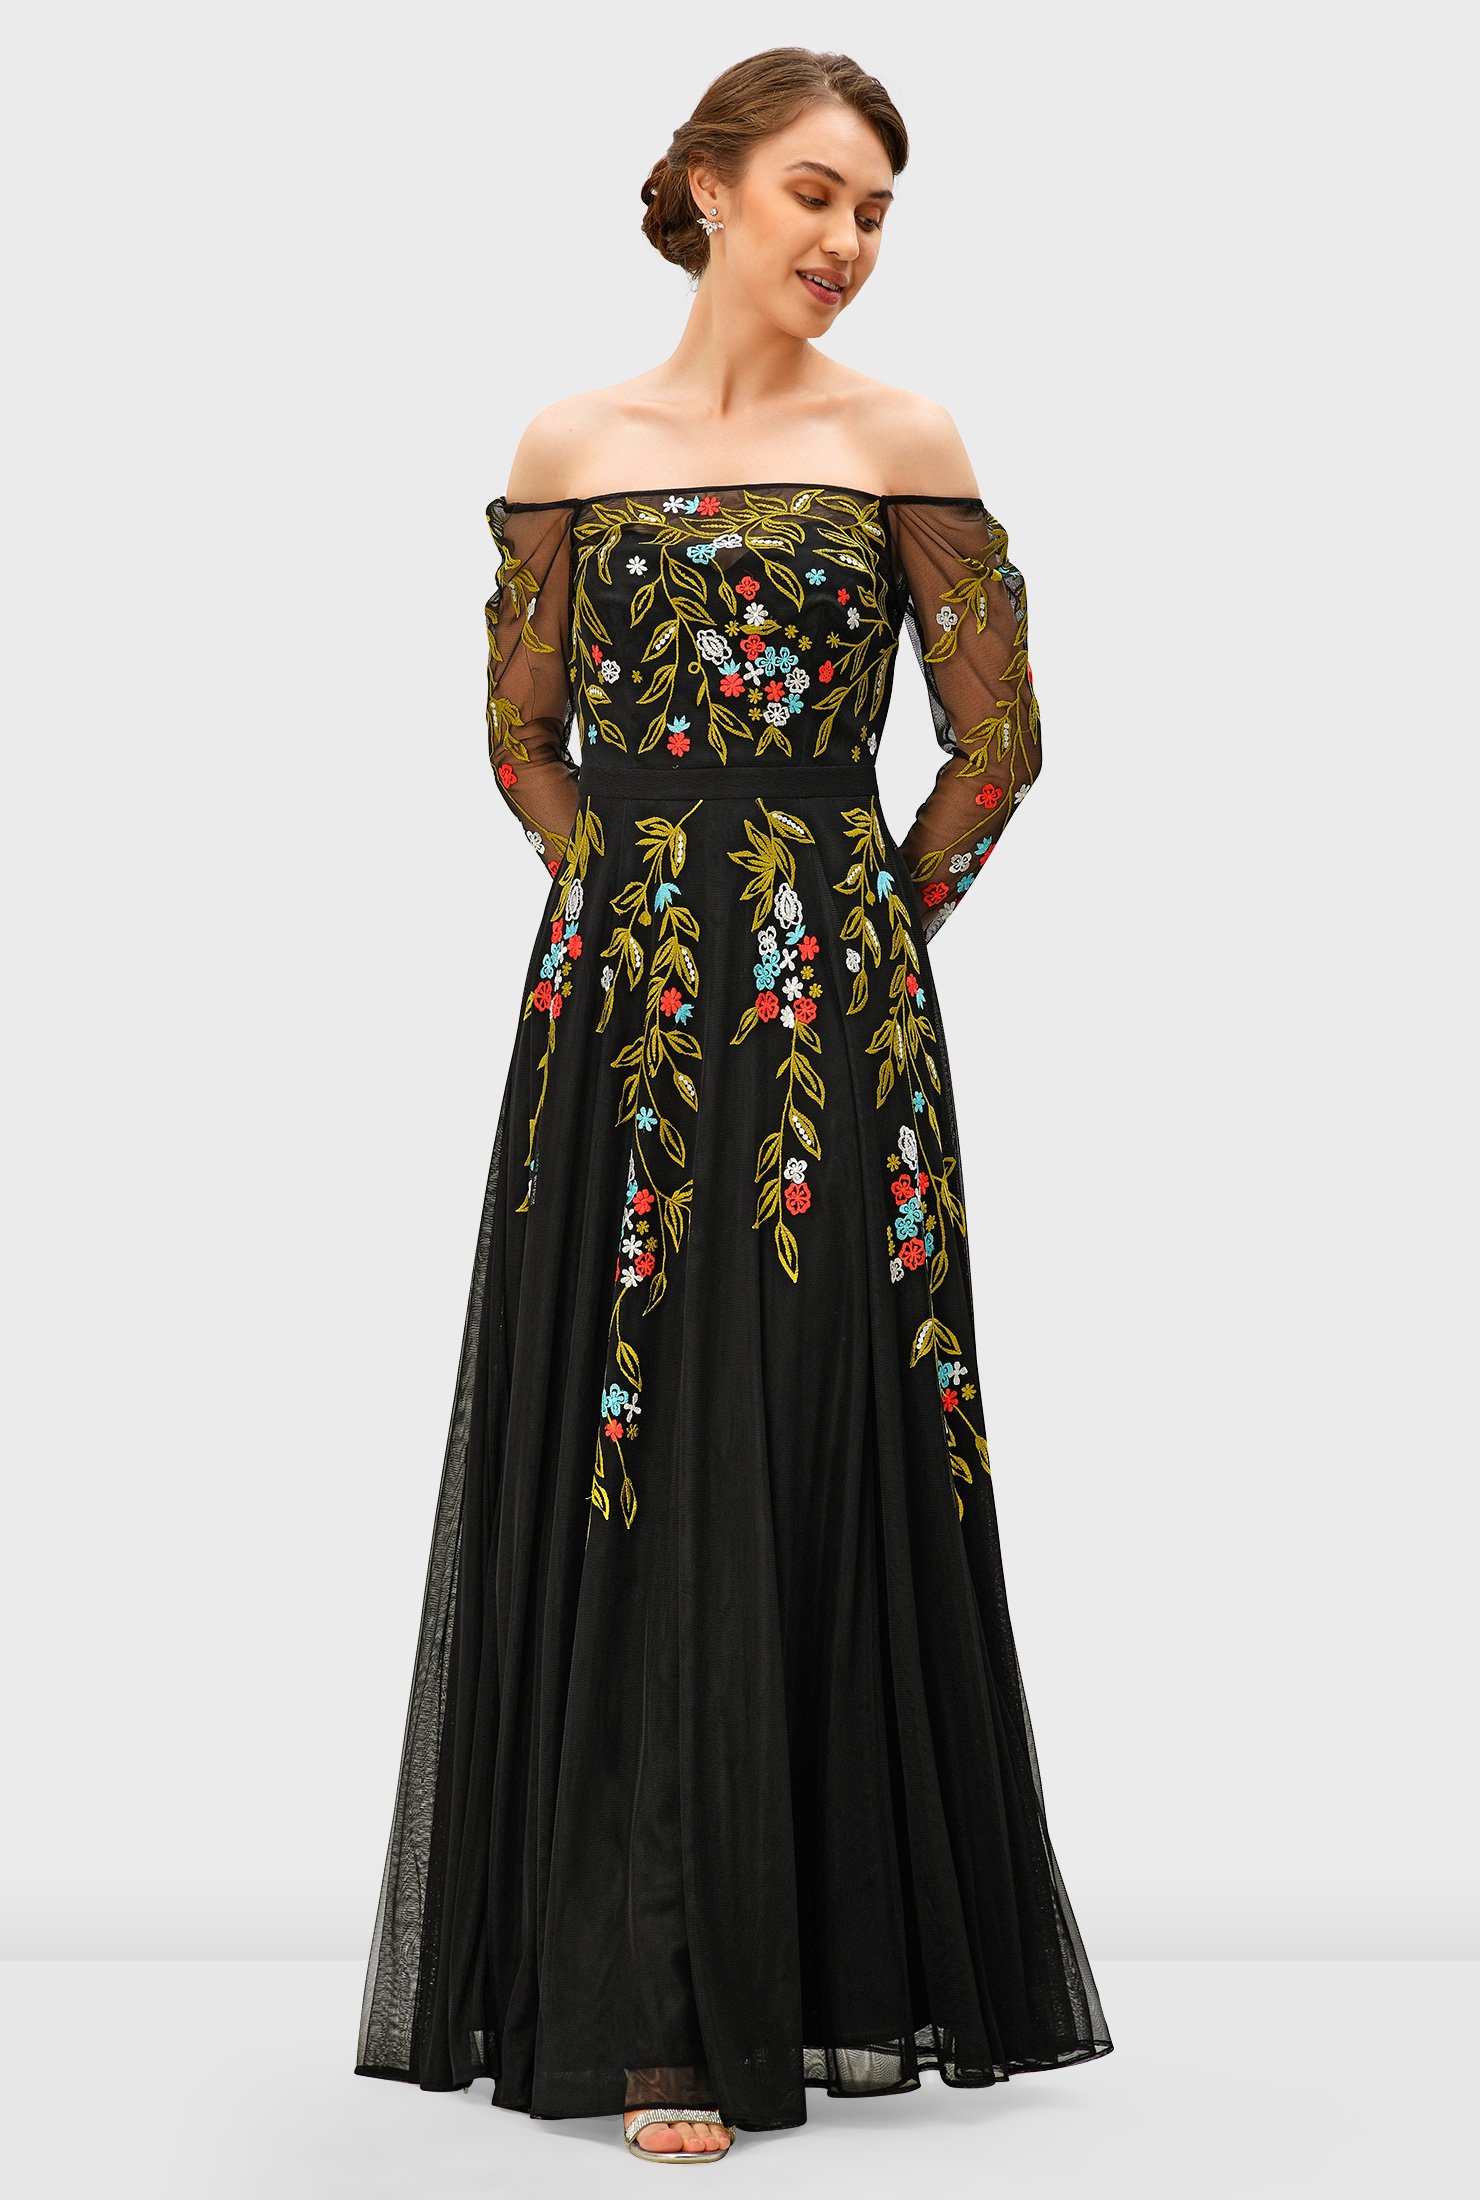 Shop Off-the-shoulder floral embroidery illusion tulle dress | eShakti